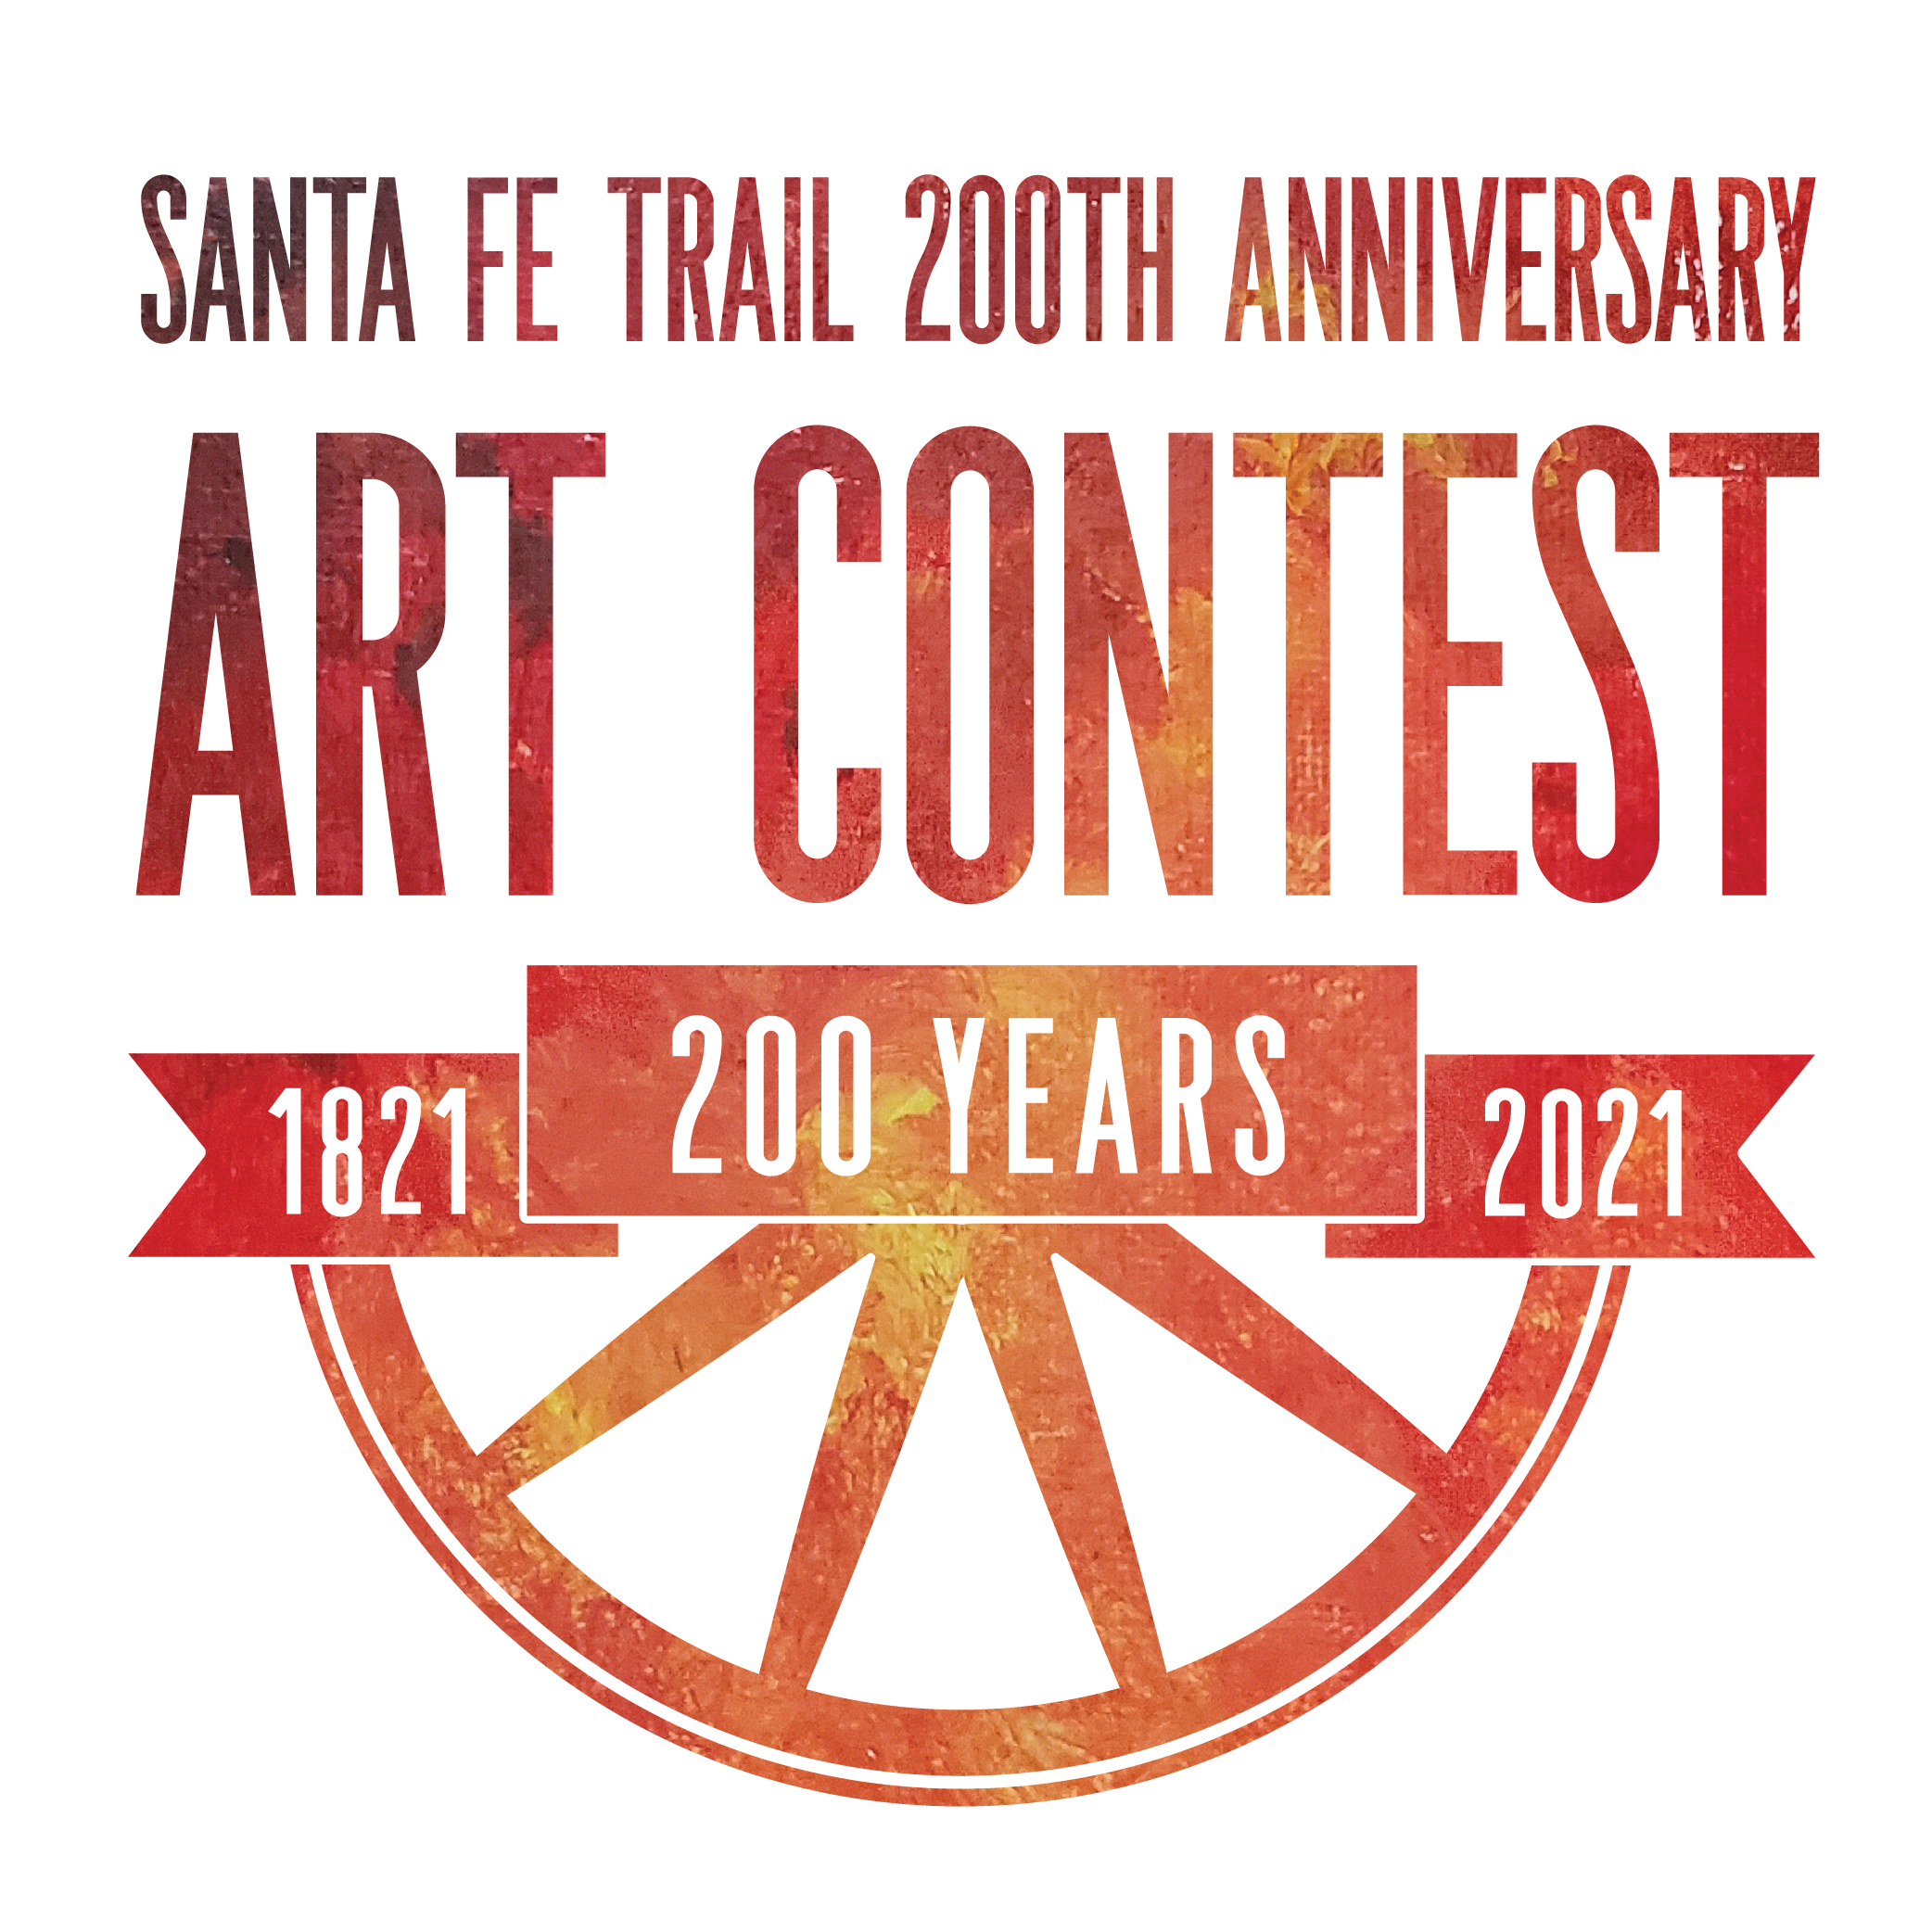 Text reading Santa Fe Trail 200th Anniversary Art Contest, 1821-2021, 200 years